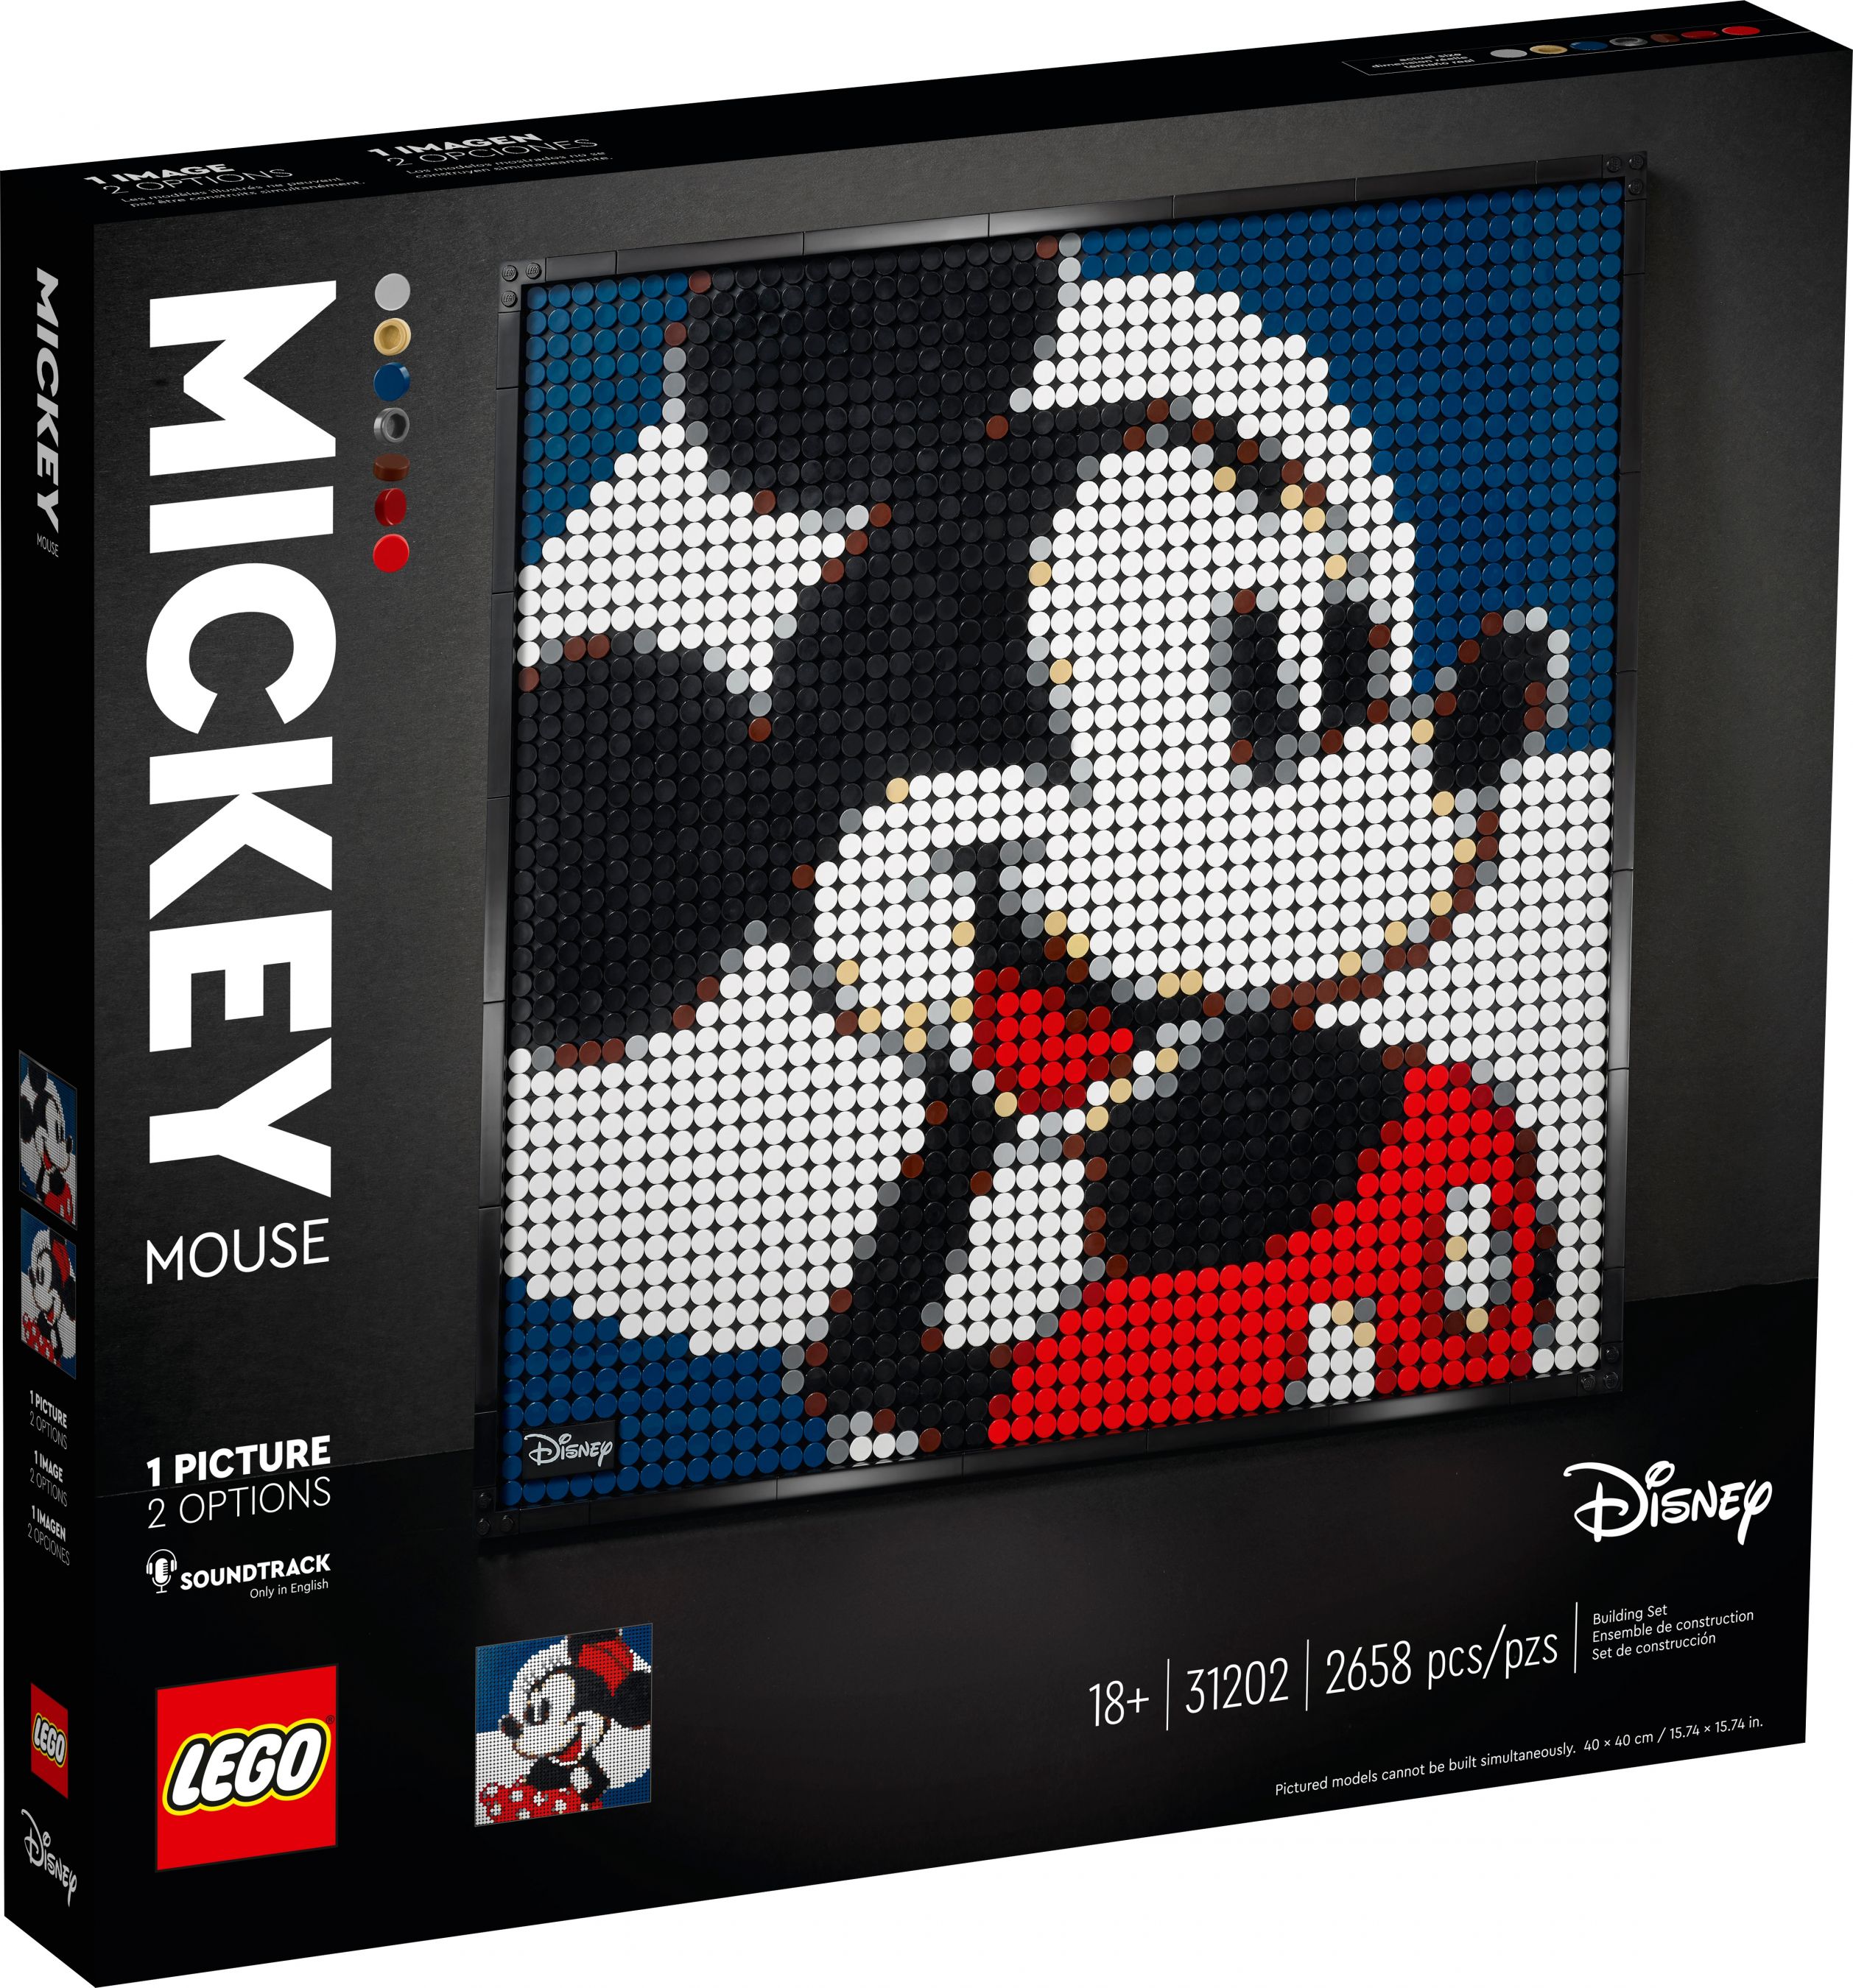 LEGO Art 31202 Disney's Mickey Mouse LEGO_31202_box1_v39.jpg